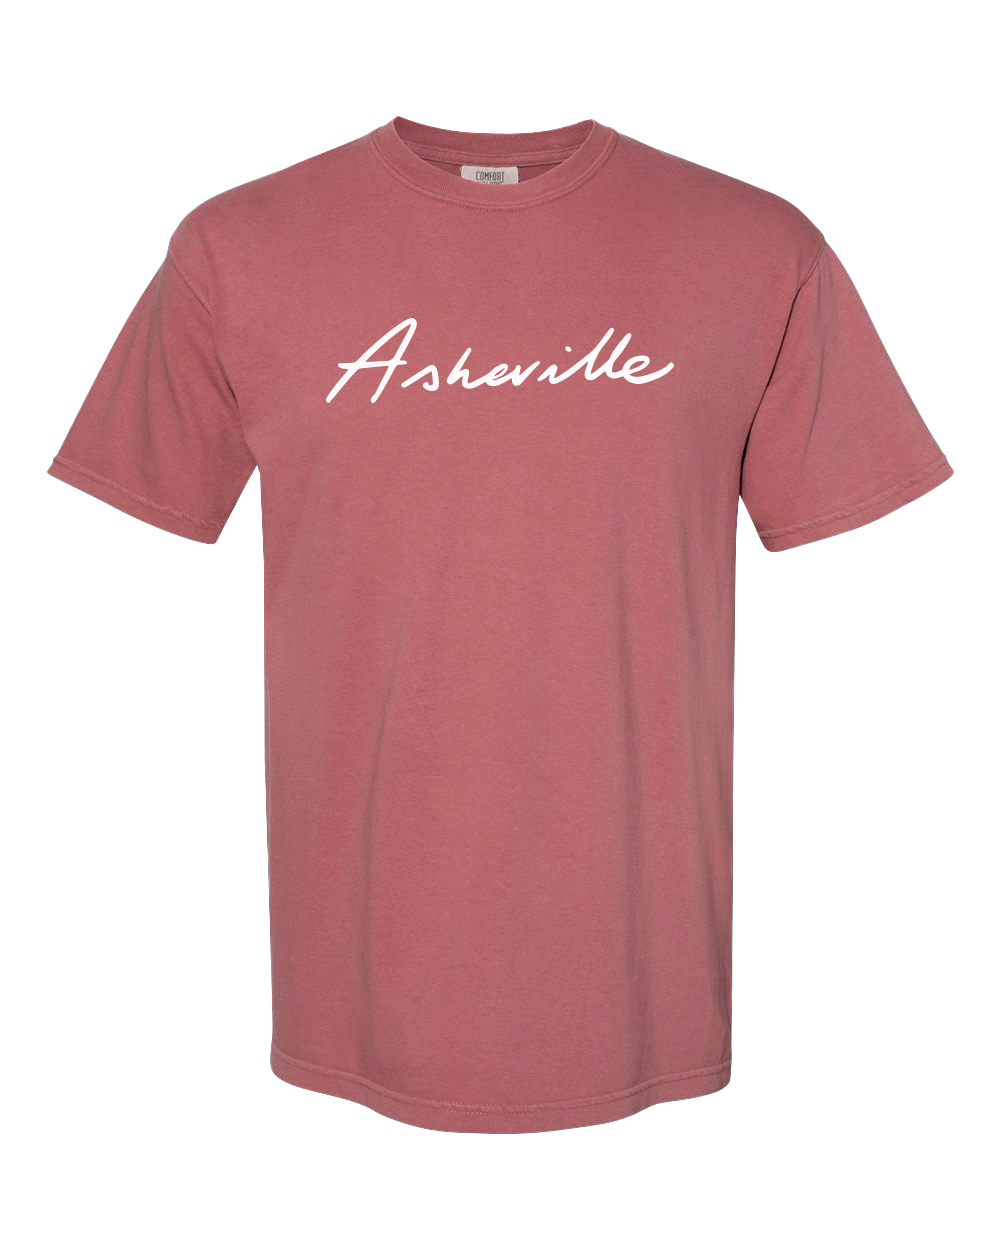 Asheville Script Short Sleeve T-Shirt